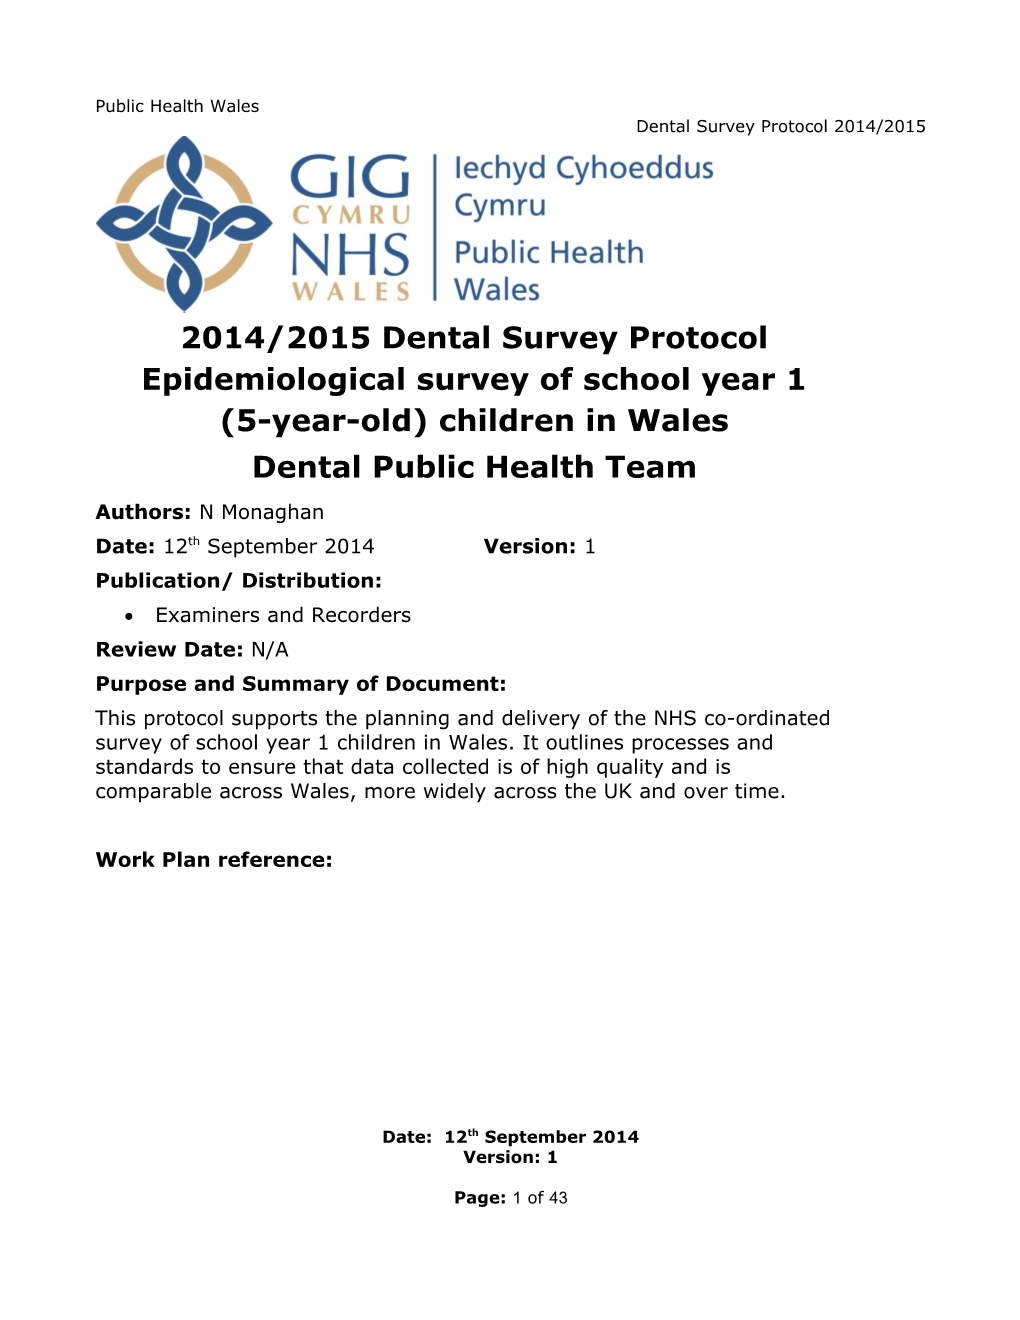 Dental Survey of School Year 1 Children in Wales 2014/2015